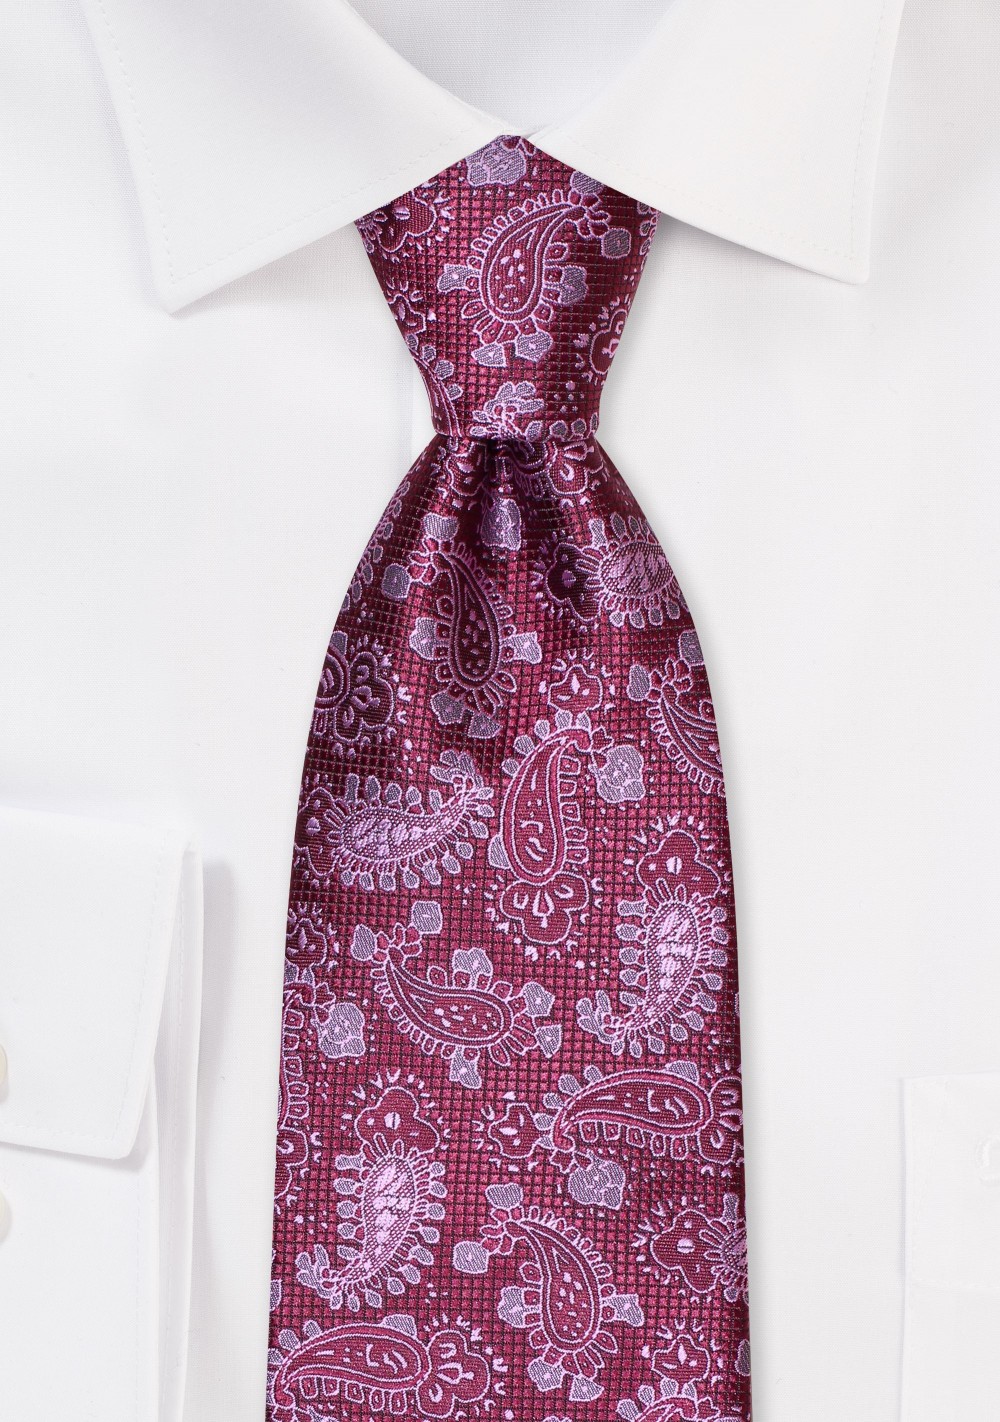 Textured Paisley Tie in Berry